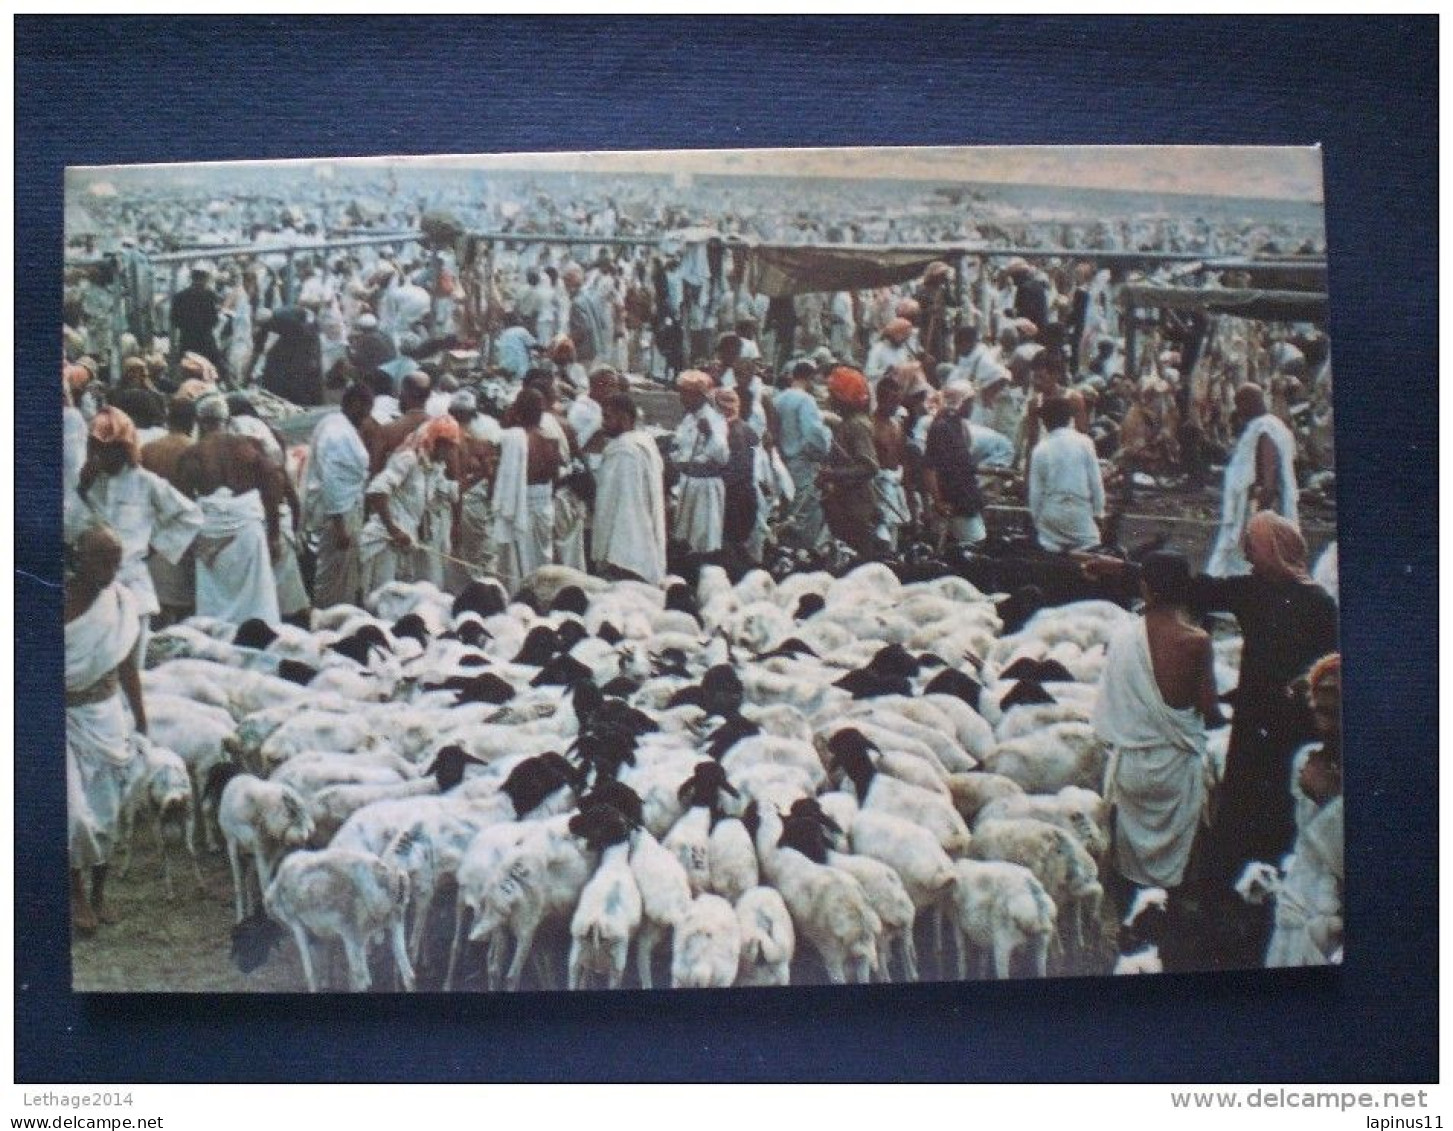 POSTCARD SAUDI ARABIA 1960 THE SACRIFICE AT MINA - Arabia Saudita